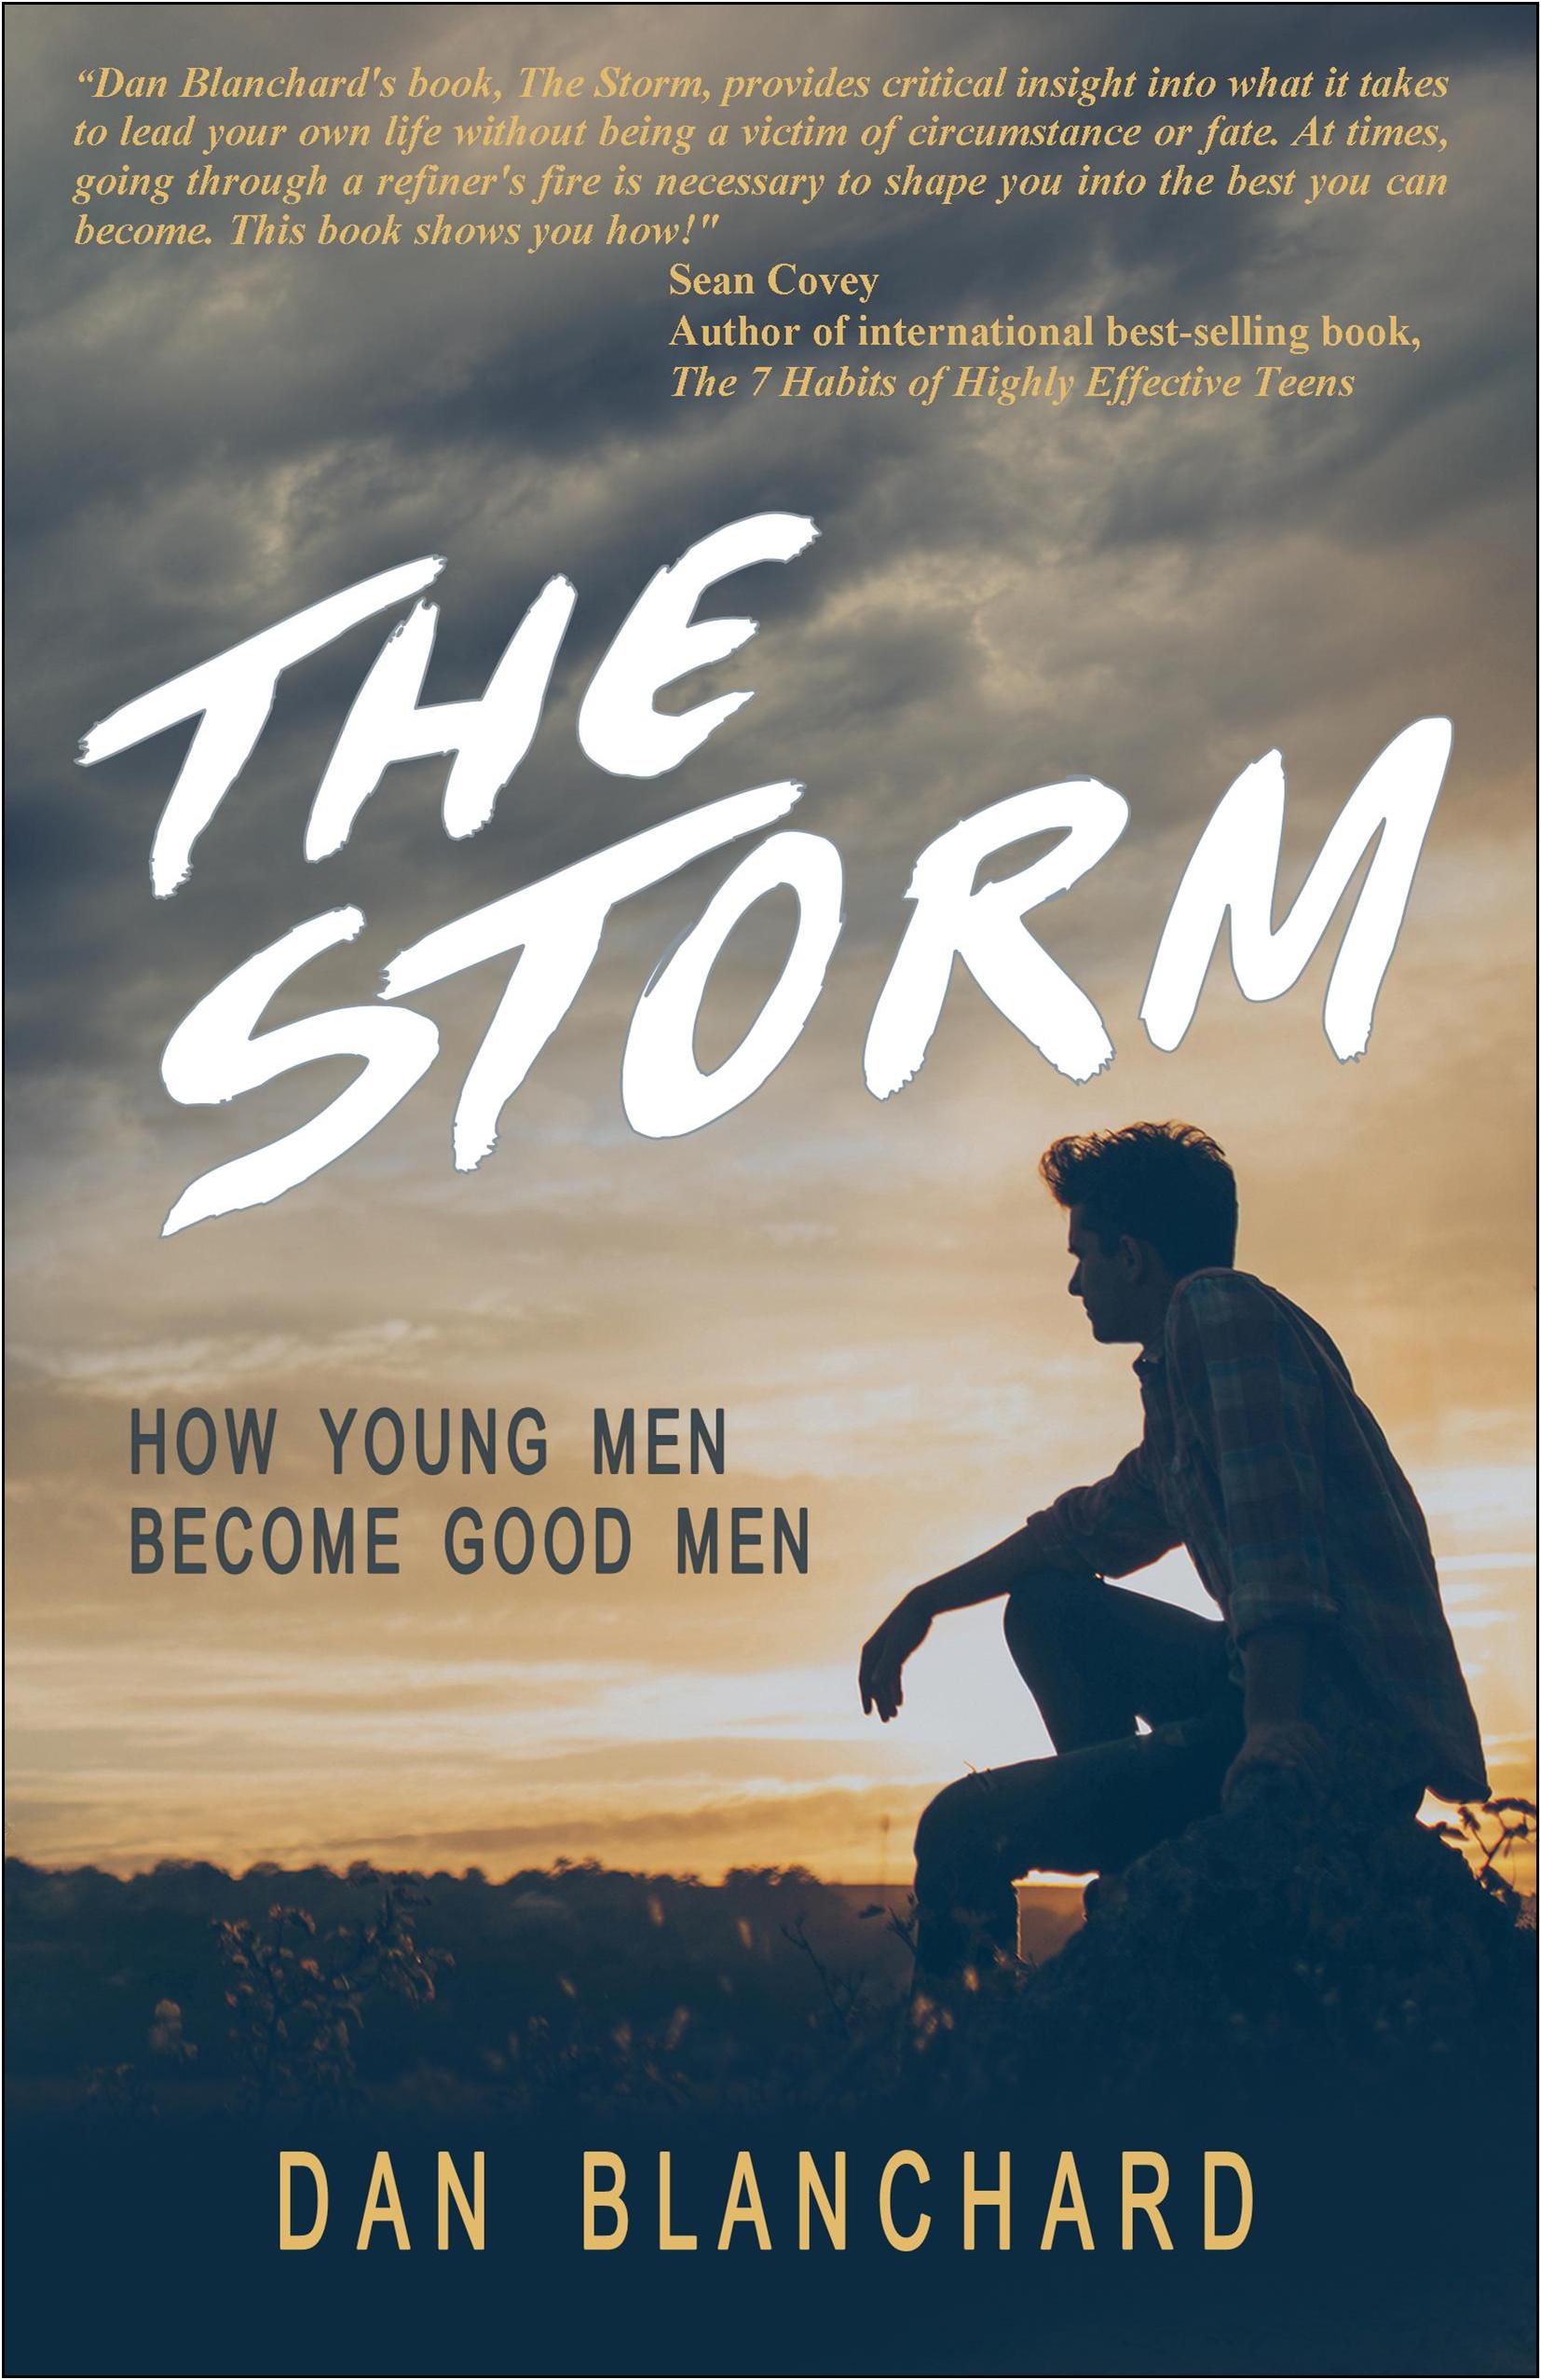 FREE: The Storm: How Young Men Become Good Men by Dan Blanchard by Dan Blanchard